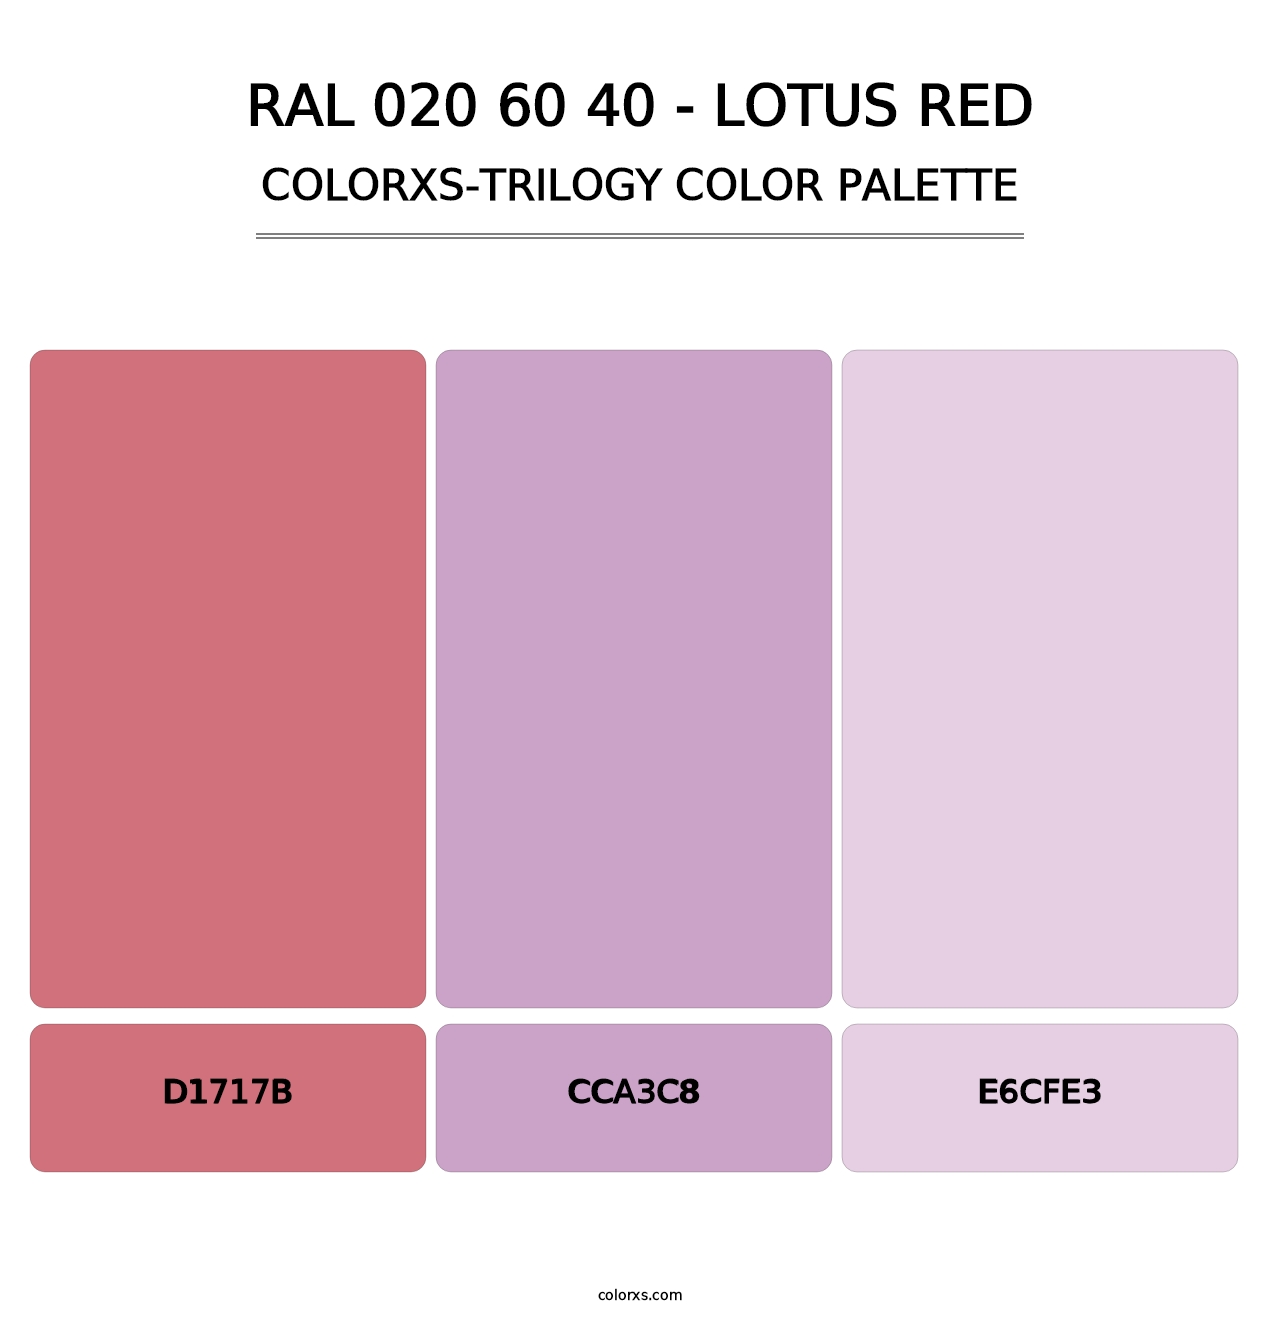 RAL 020 60 40 - Lotus Red - Colorxs Trilogy Palette